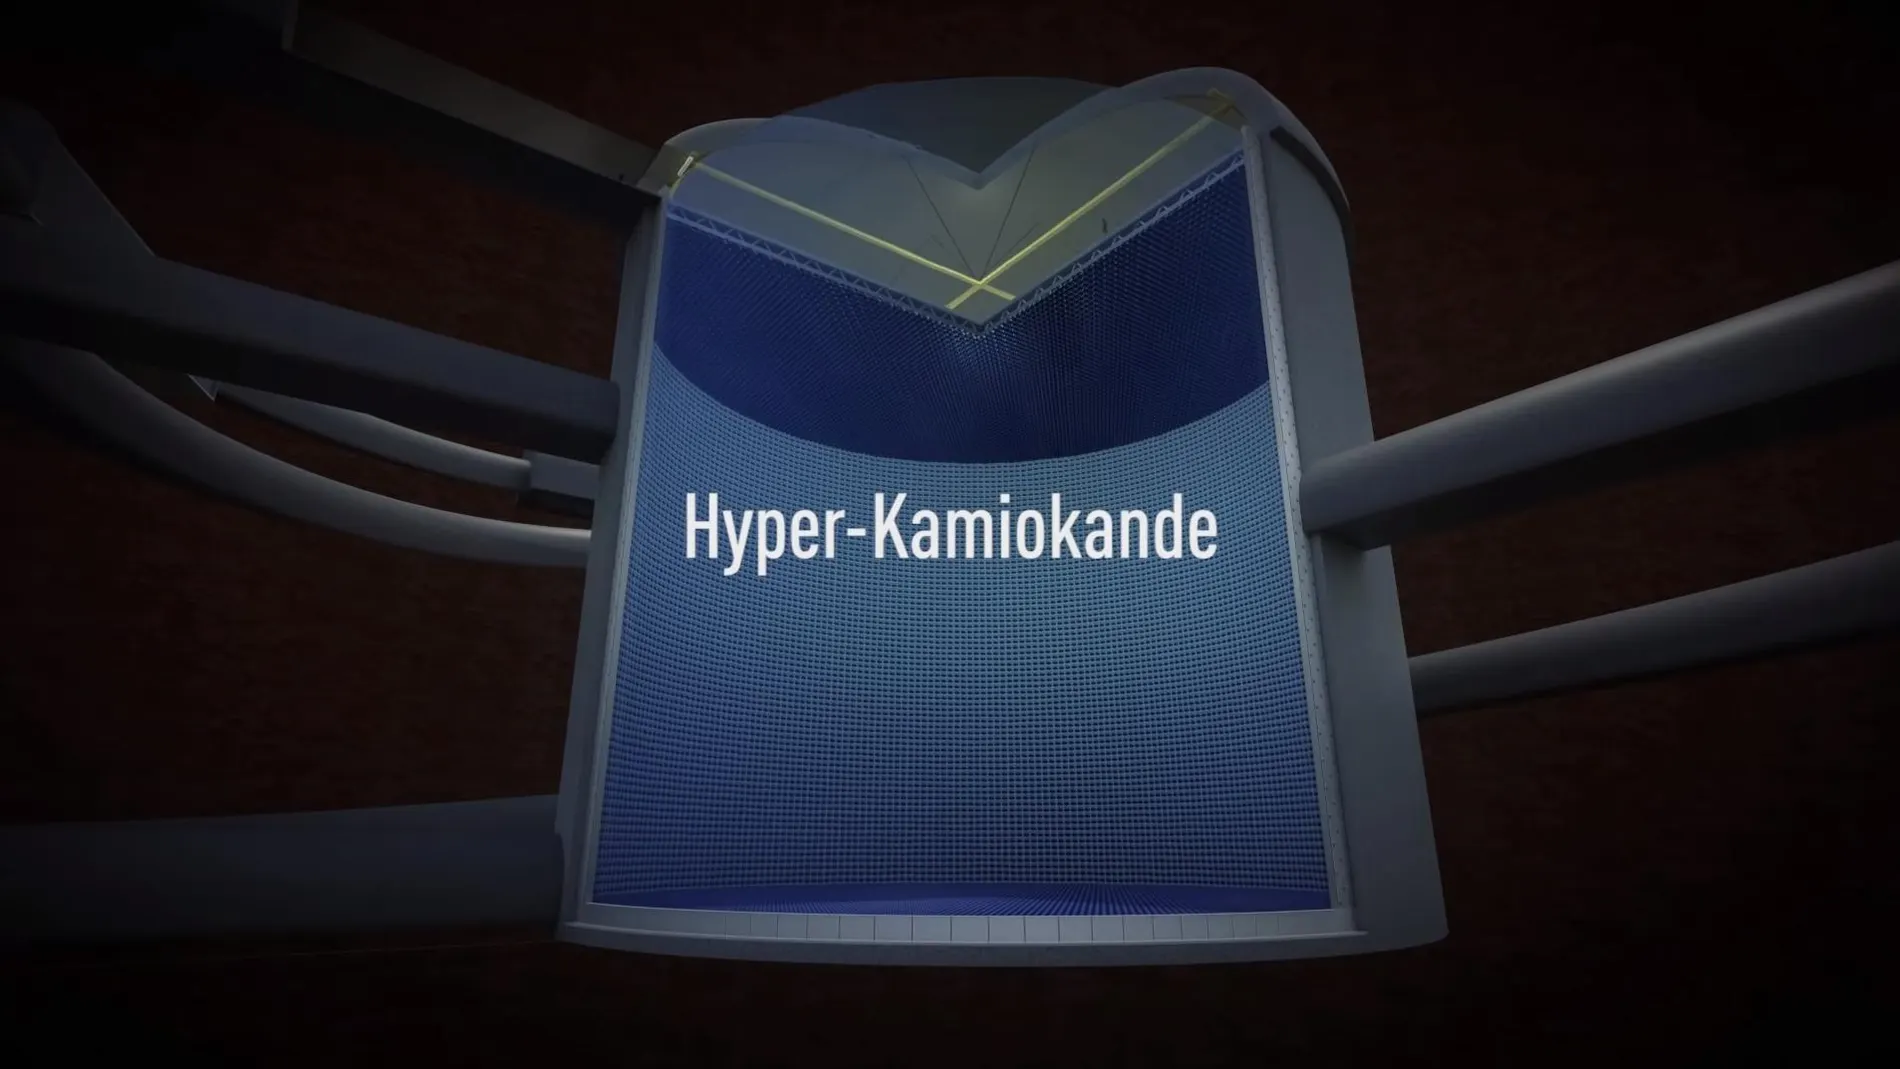 Hyper-Kamiokande